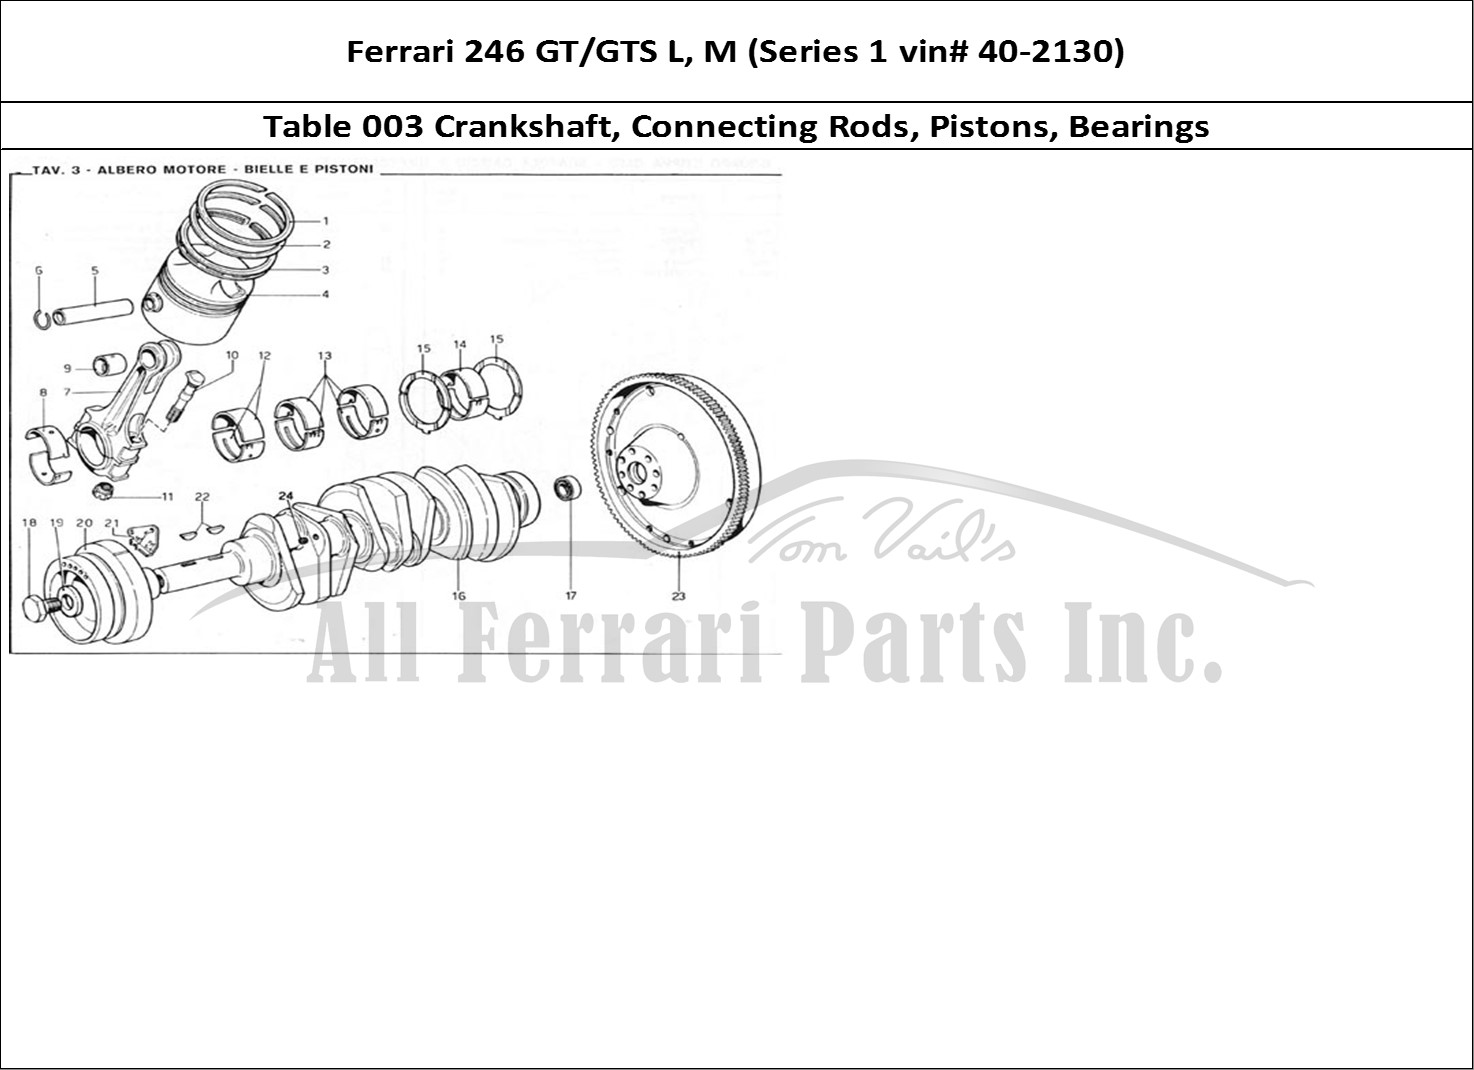 Ferrari Parts Ferrari 246 GT Series 1 Page 003 Crankshaft - Con Rods & P